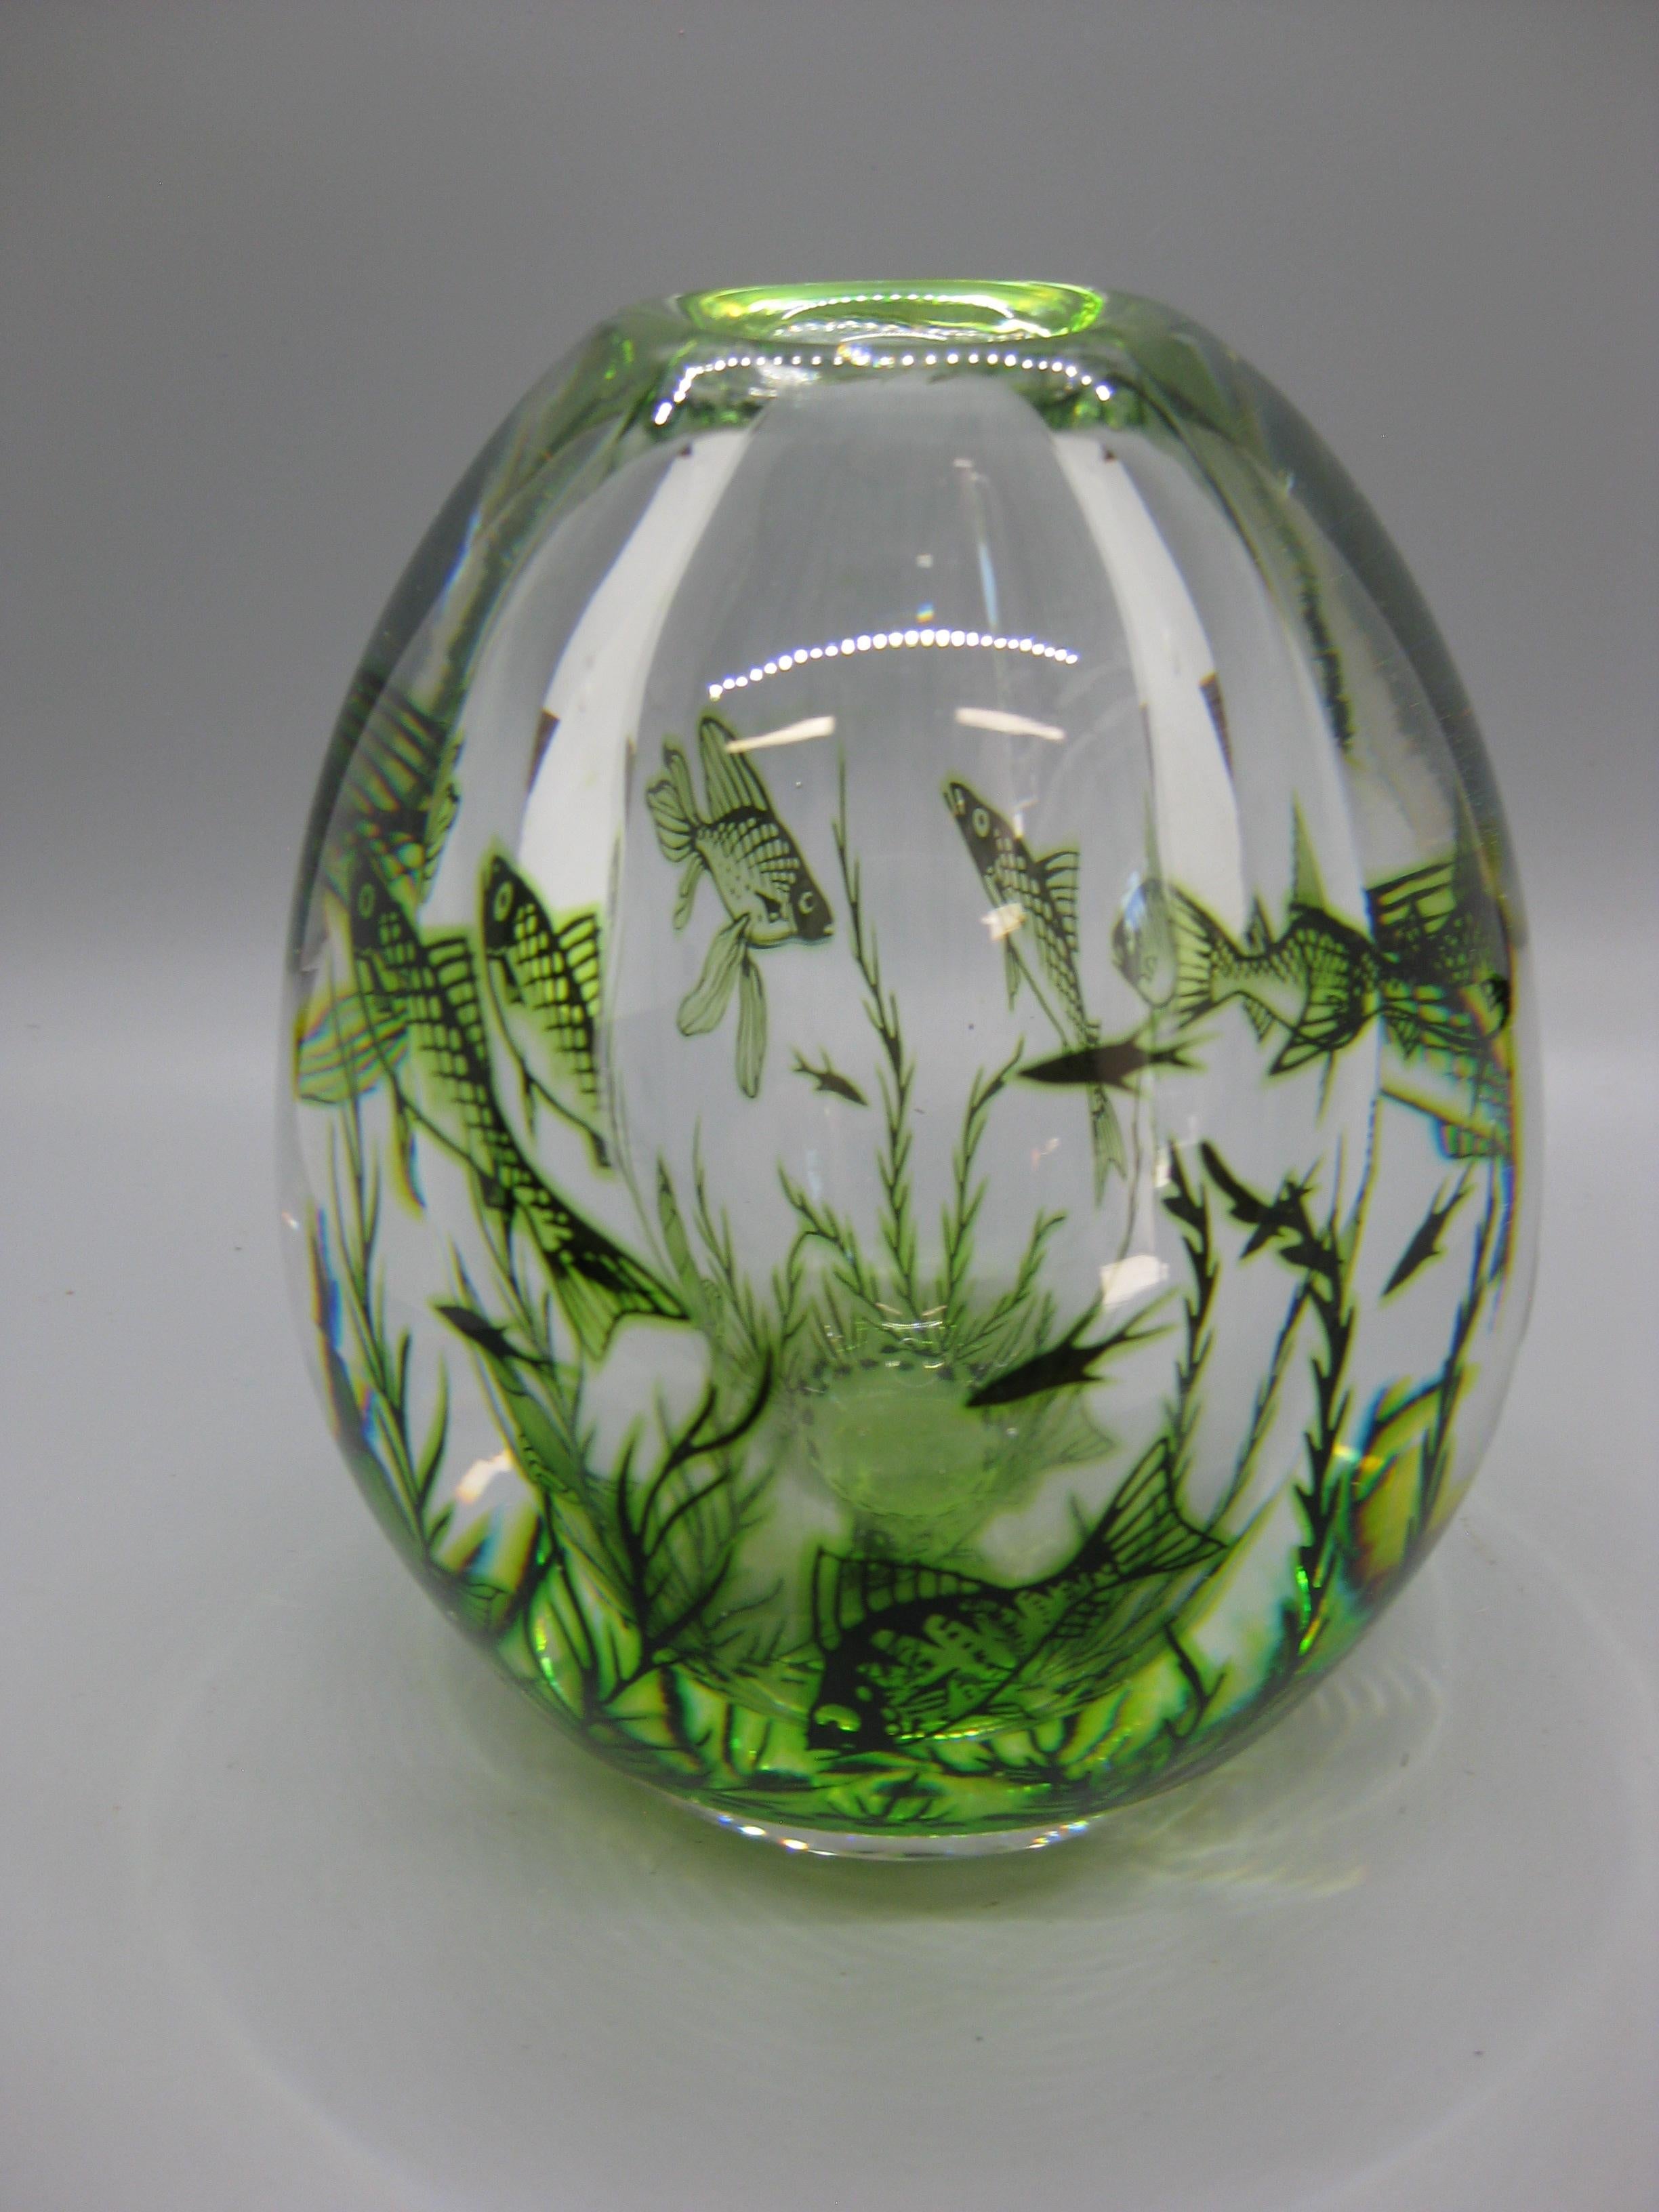 20th Century 1940's Orrefors Edward Hald Graal Fish Art Glass Vase Sculpture Made in Sweden For Sale